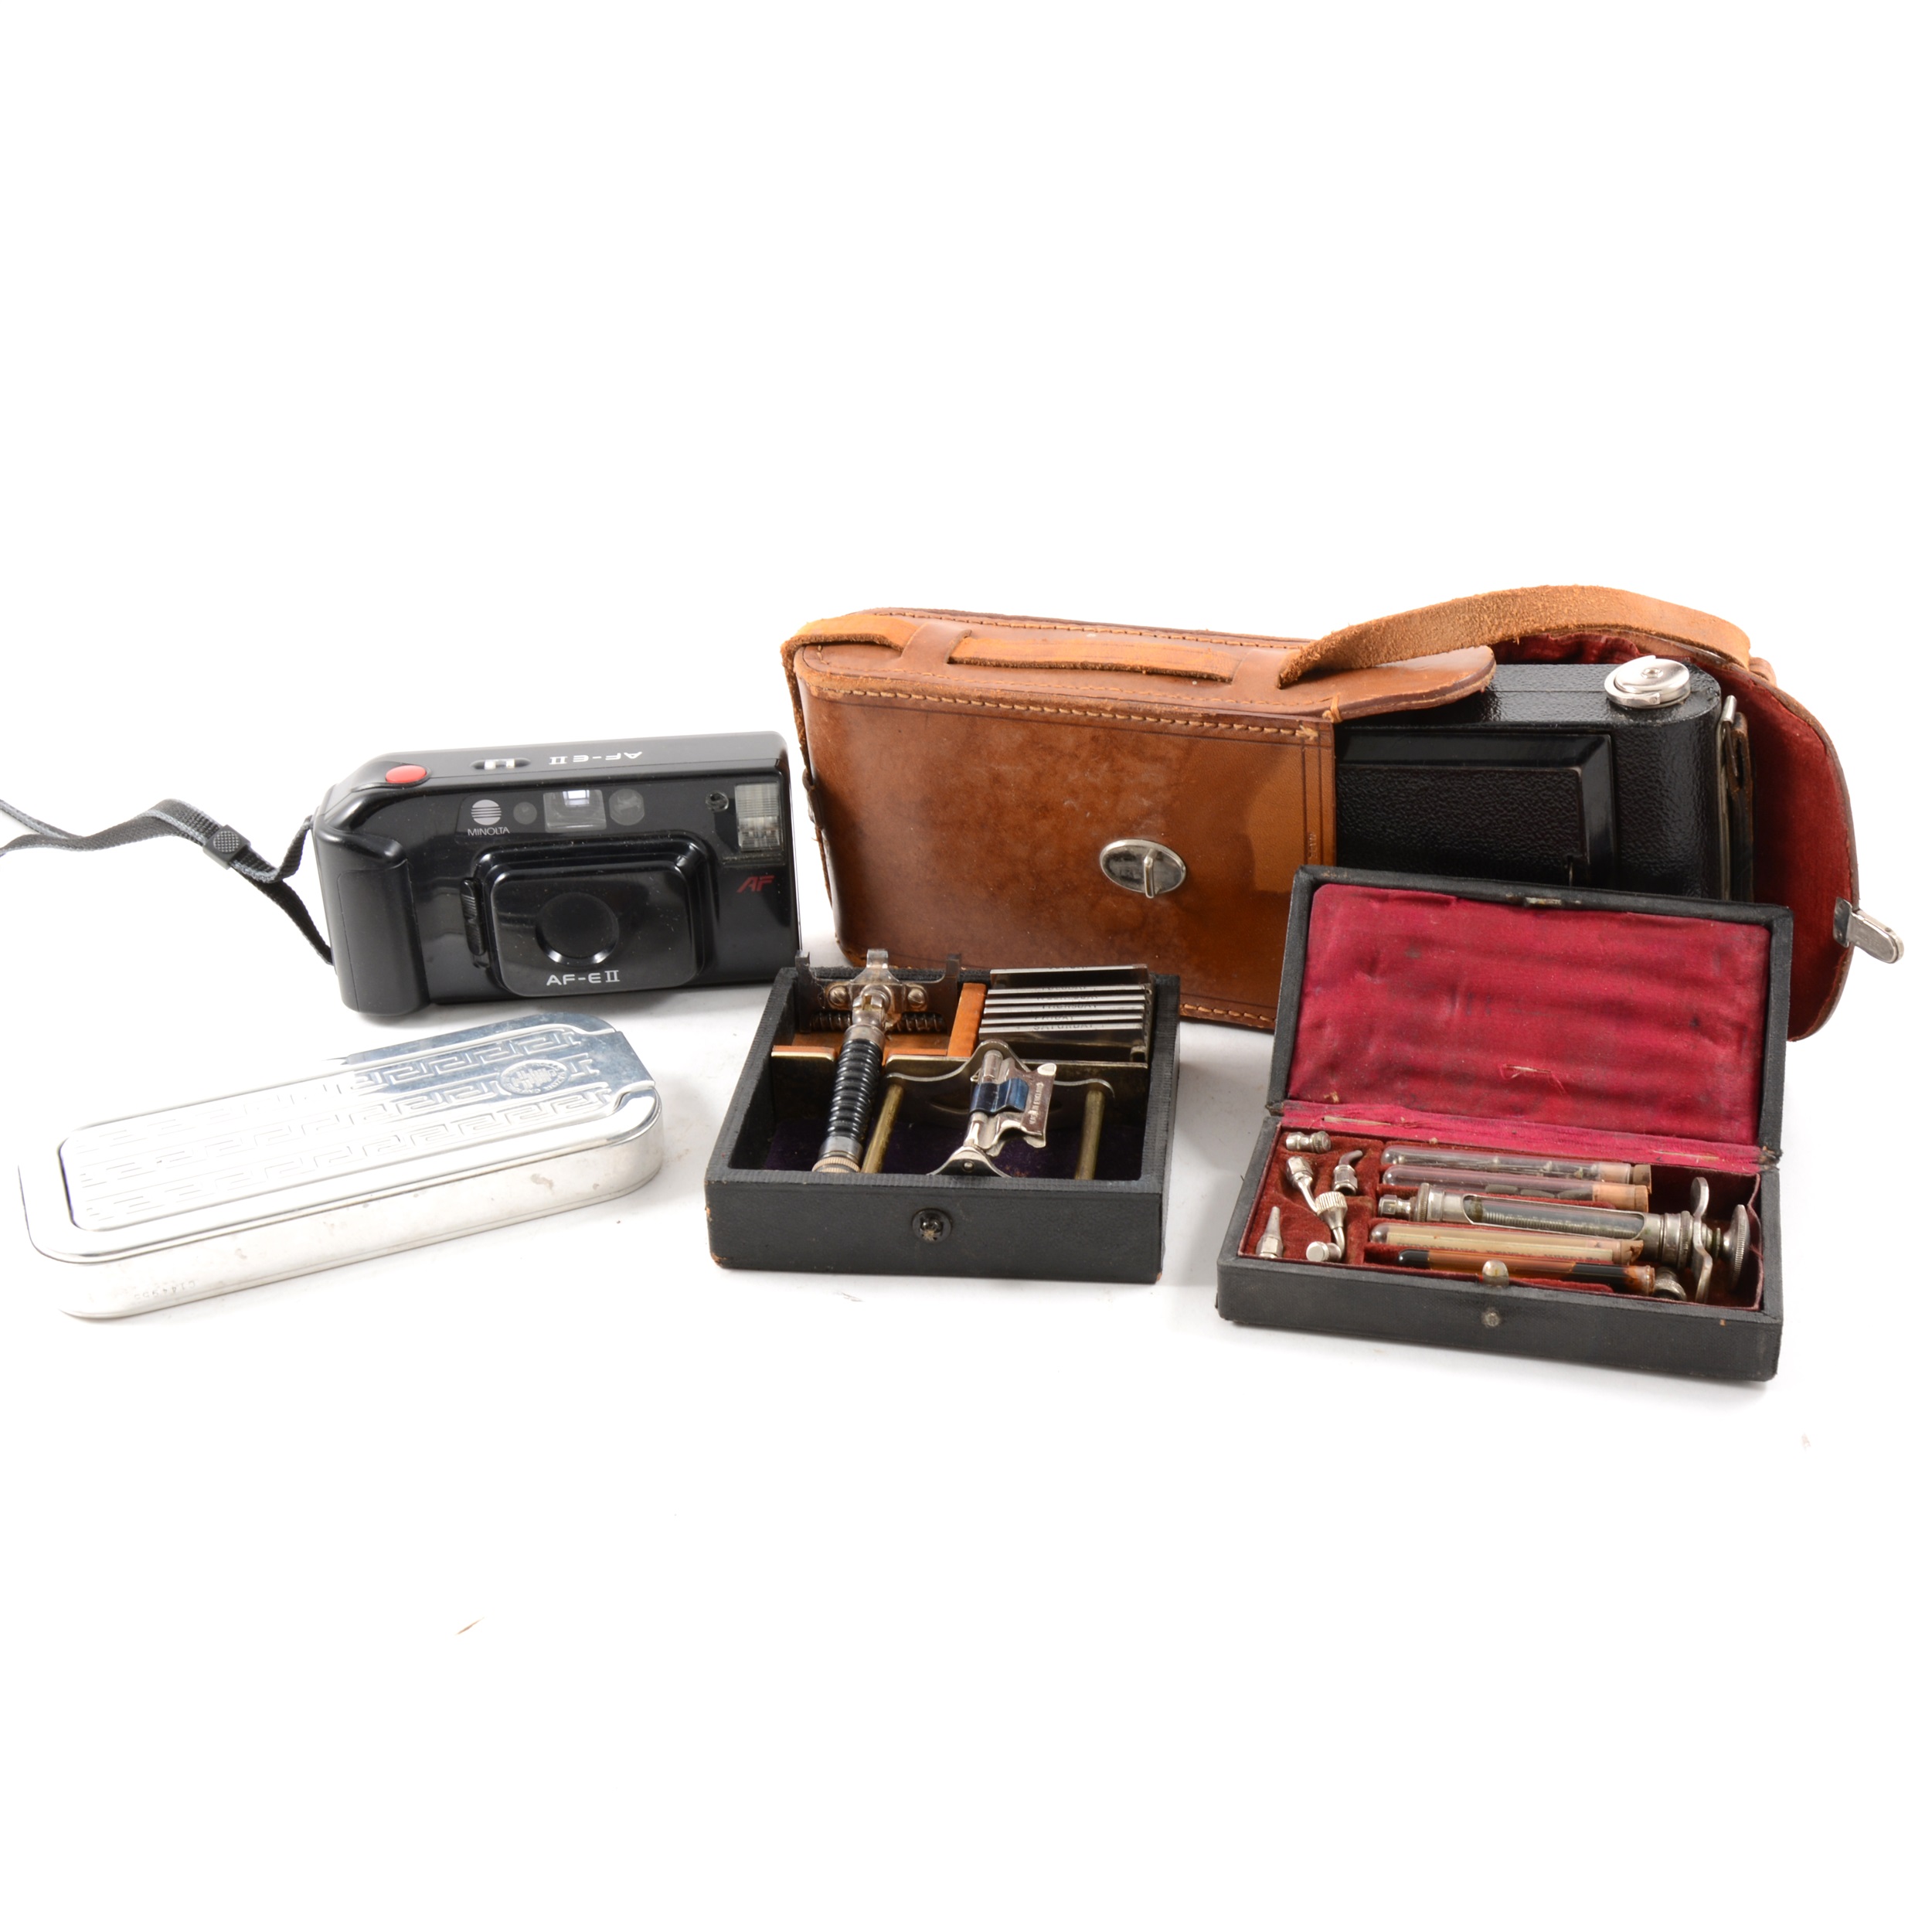 A Kodak Six-16 junior Camera in leather case, dentist's syringe set in case, a brass mounted